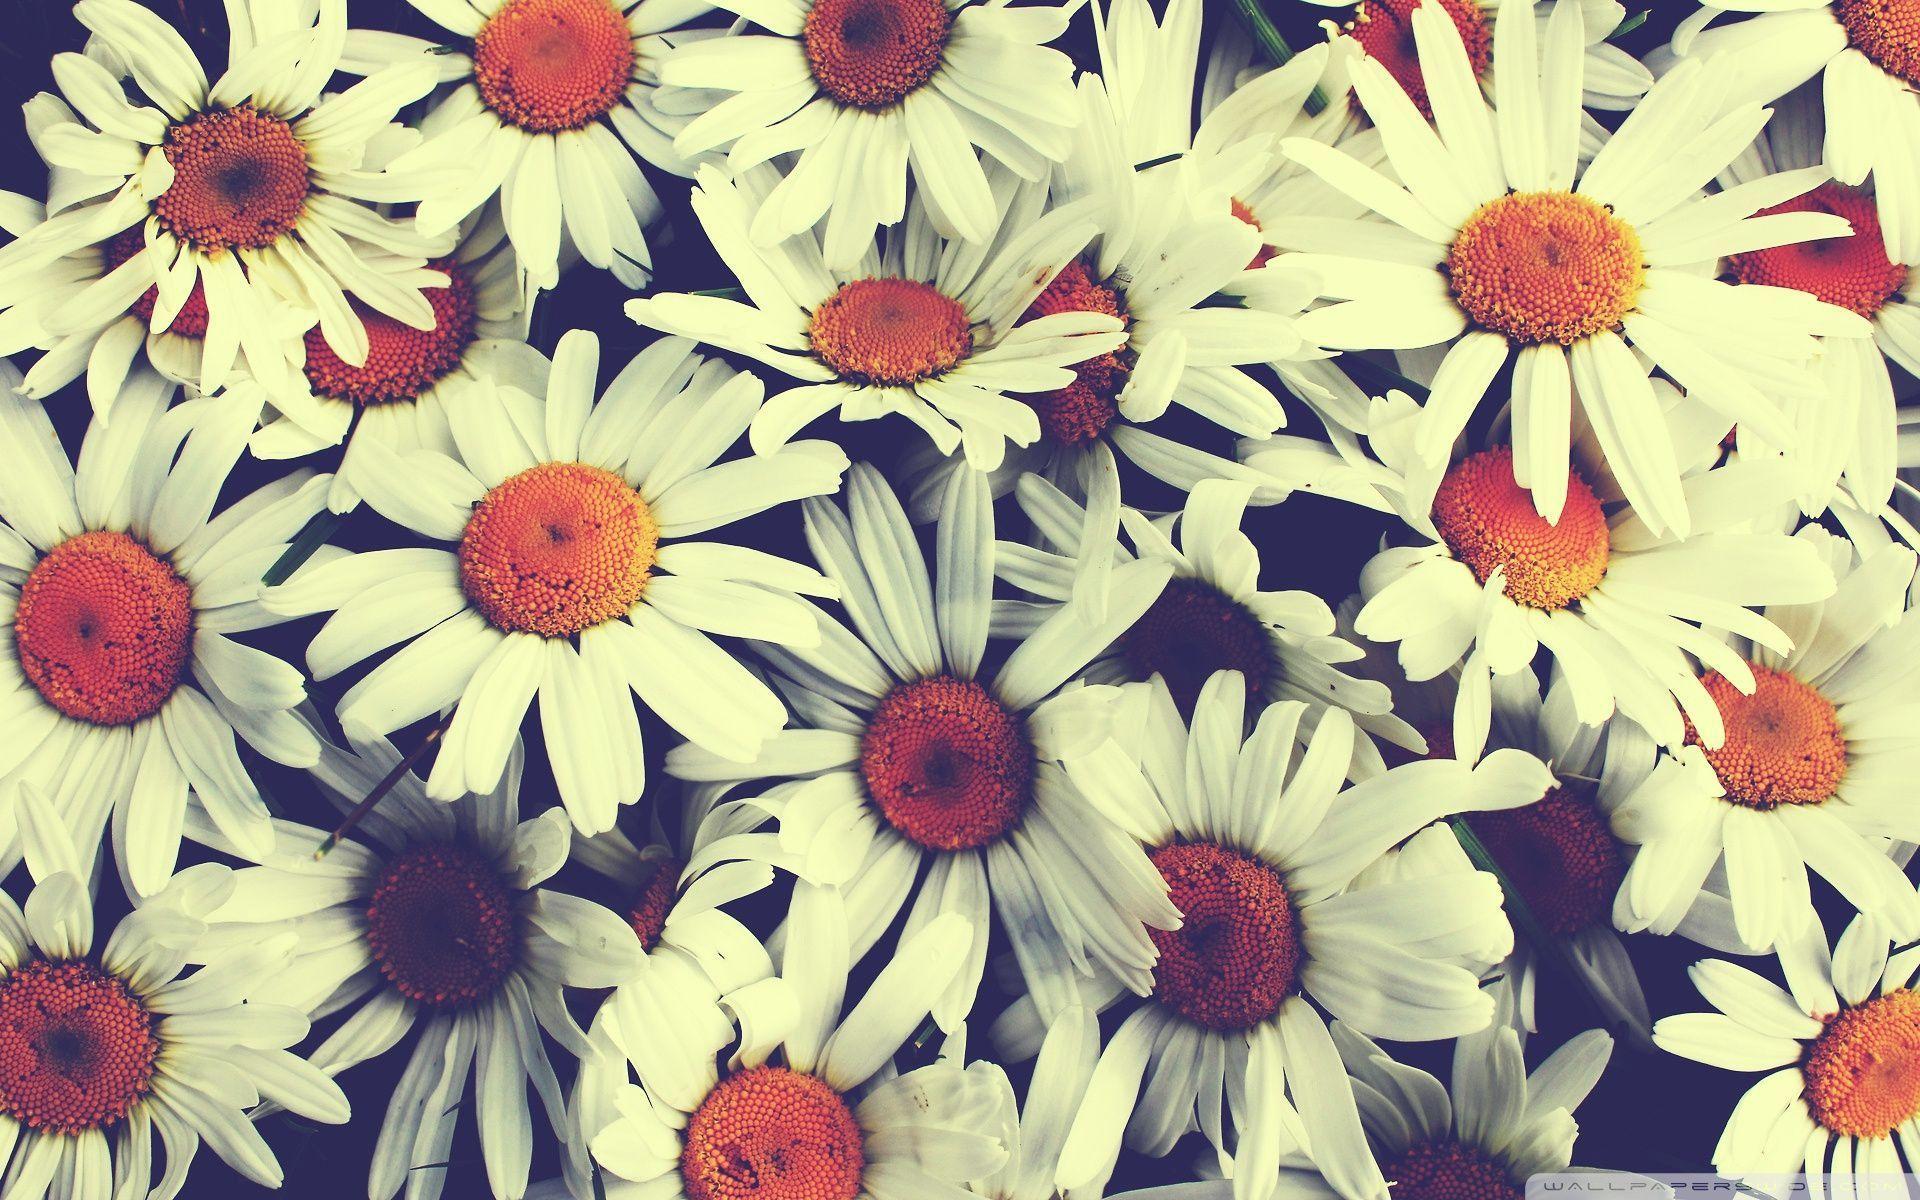 Unduh 47 Background Tumblr Flowers Gratis